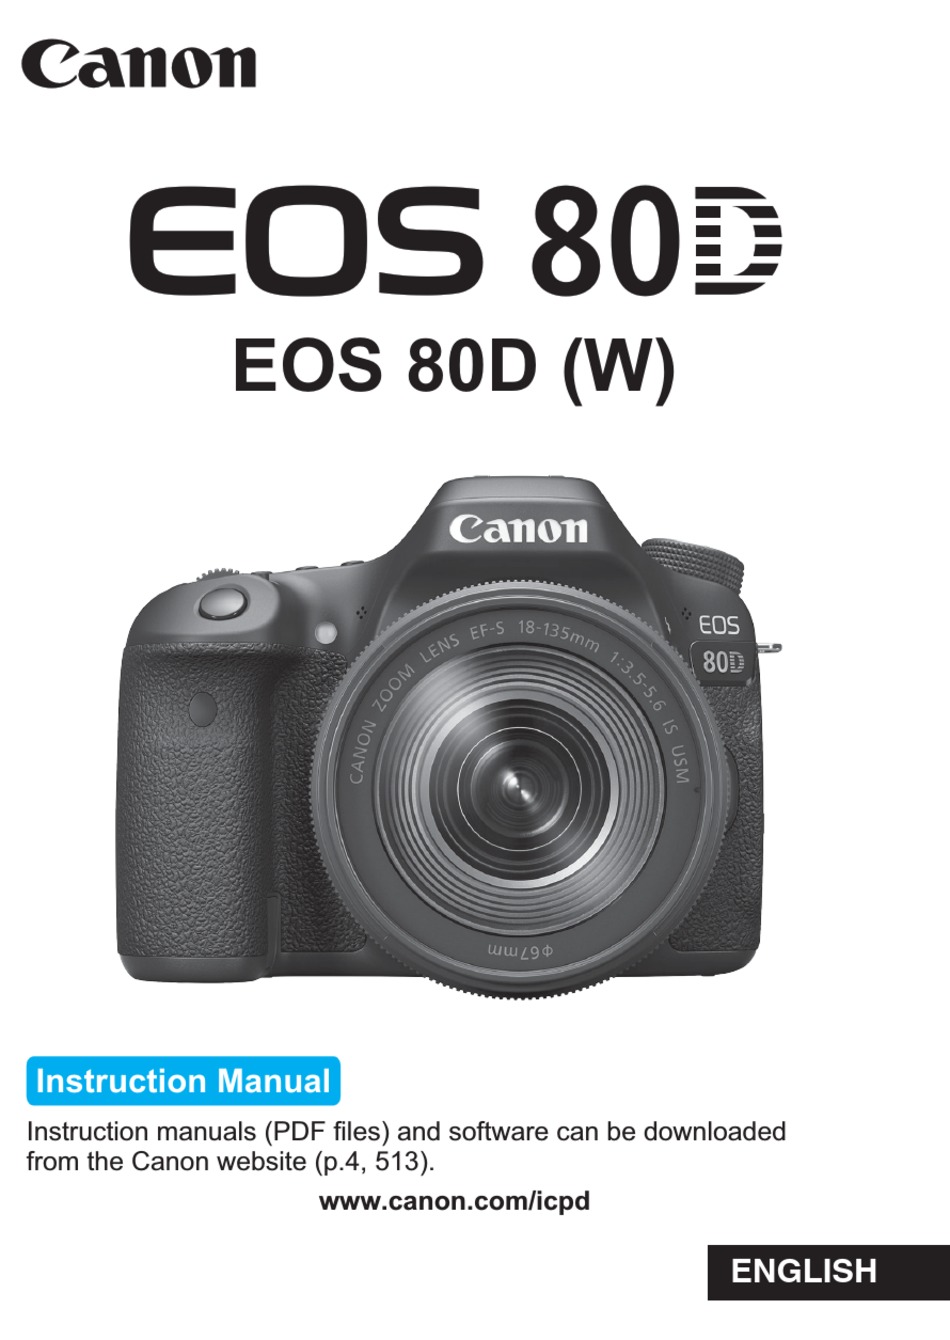 Canon Eos 80d Instruction Manual Pdf Download Manualslib